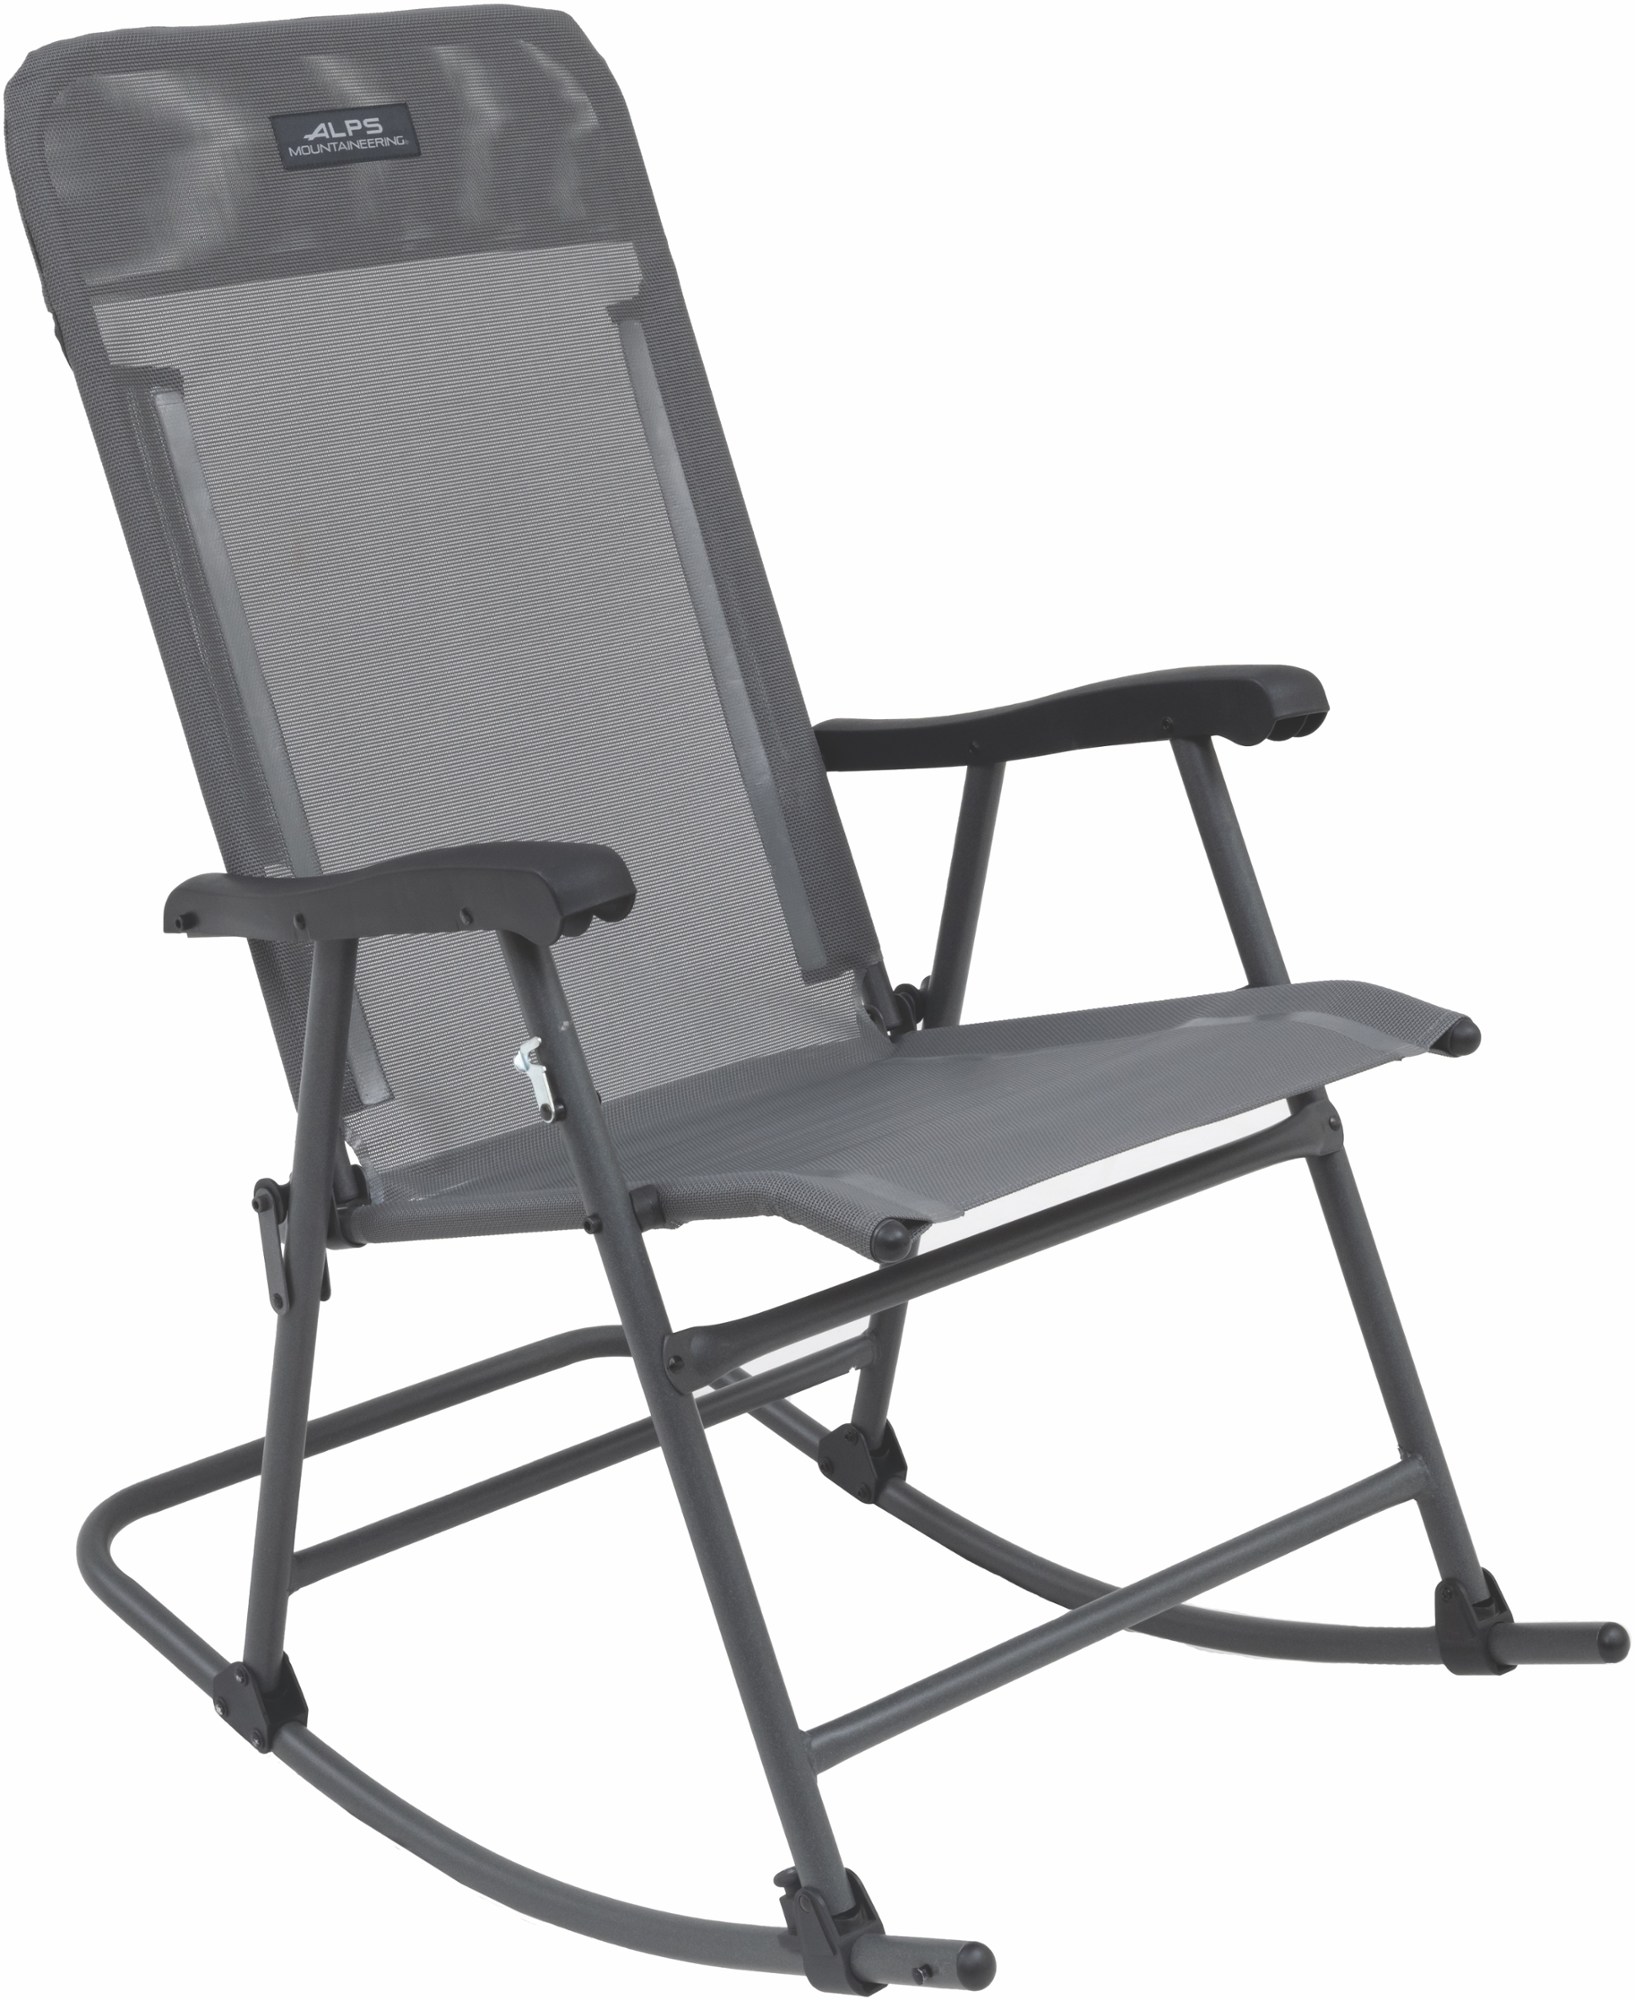 Кресло-качалка Westwind ALPS Mountaineering, серый цена и фото